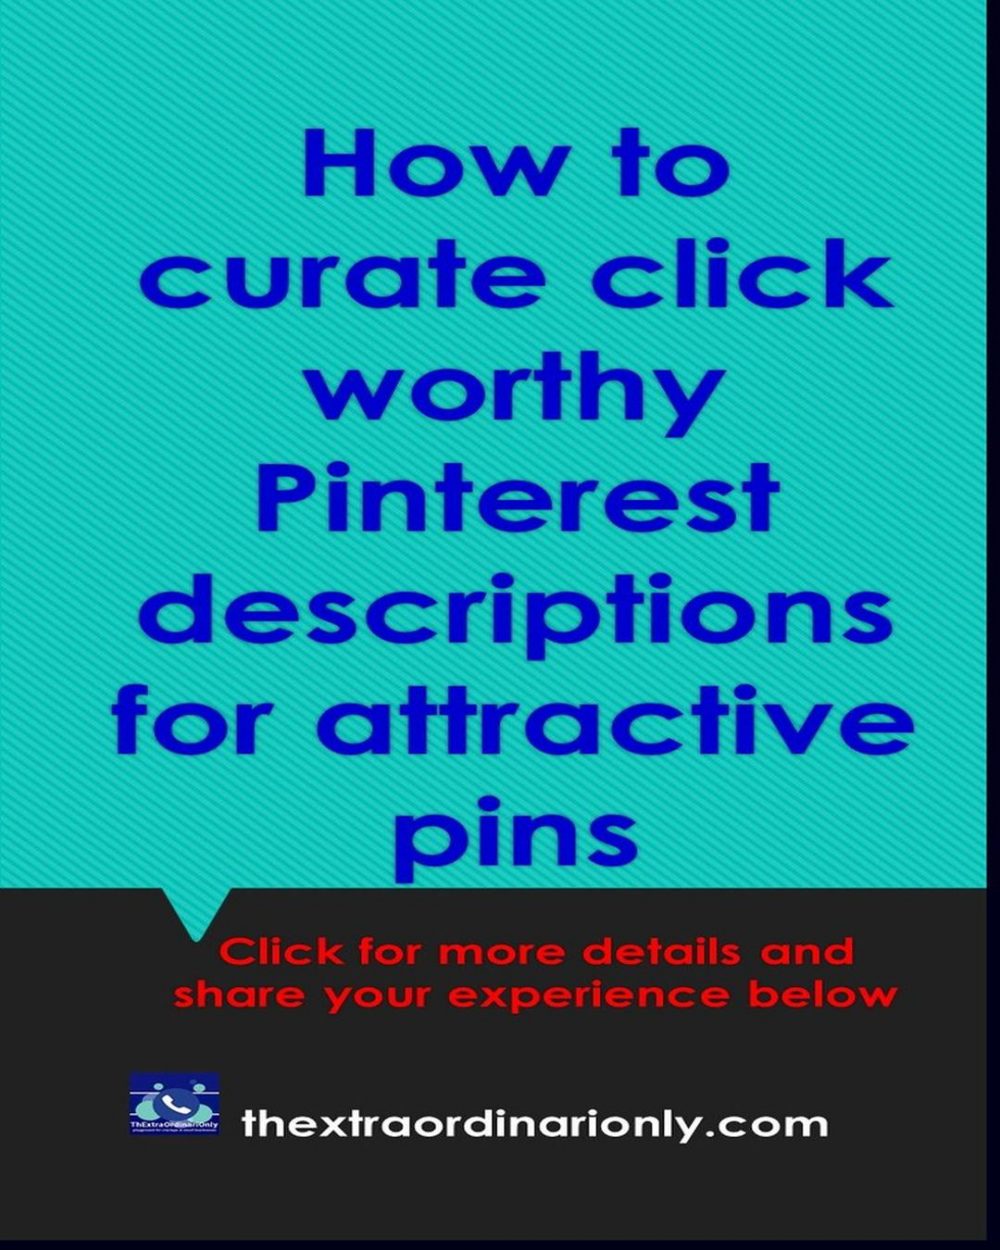 curate click worthy Pinterest descriptions